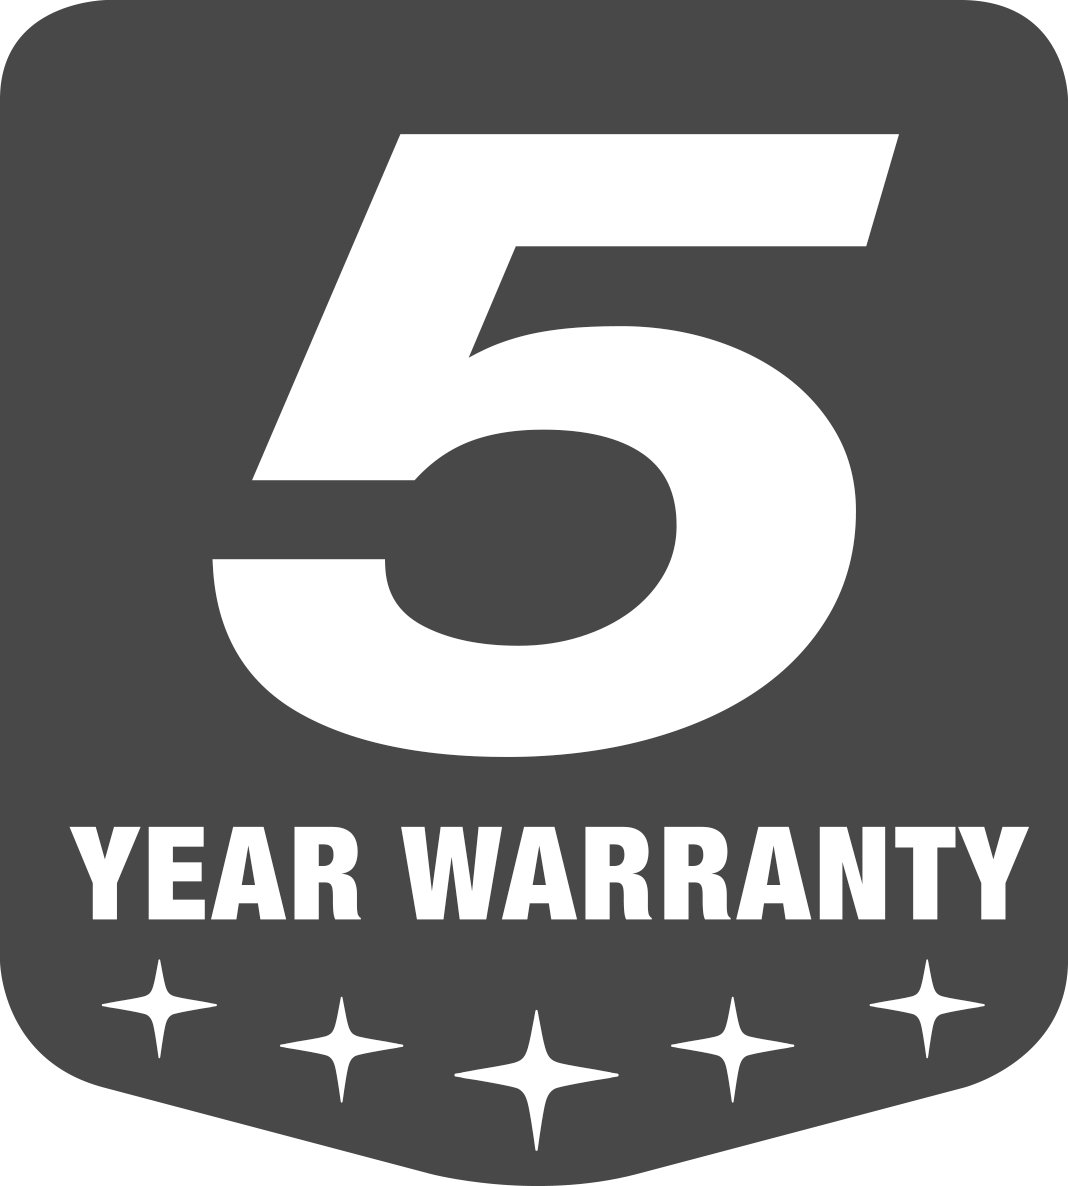 Subru 5-Year Warranty logo balck and White